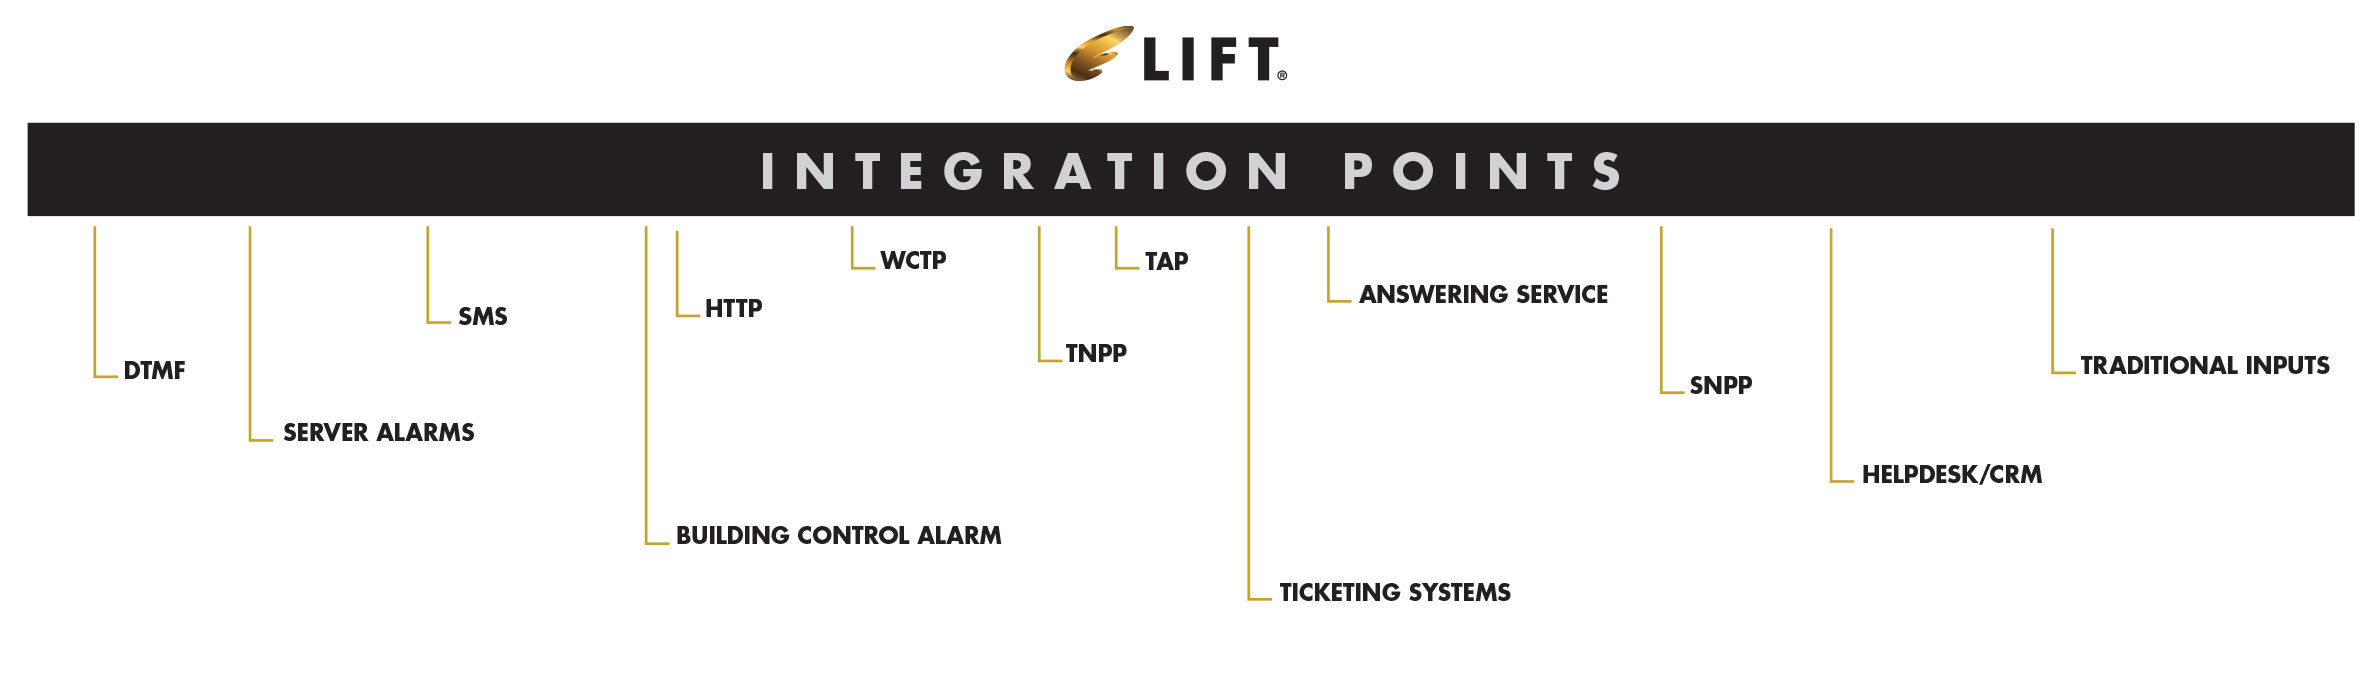 Lift Integration Points